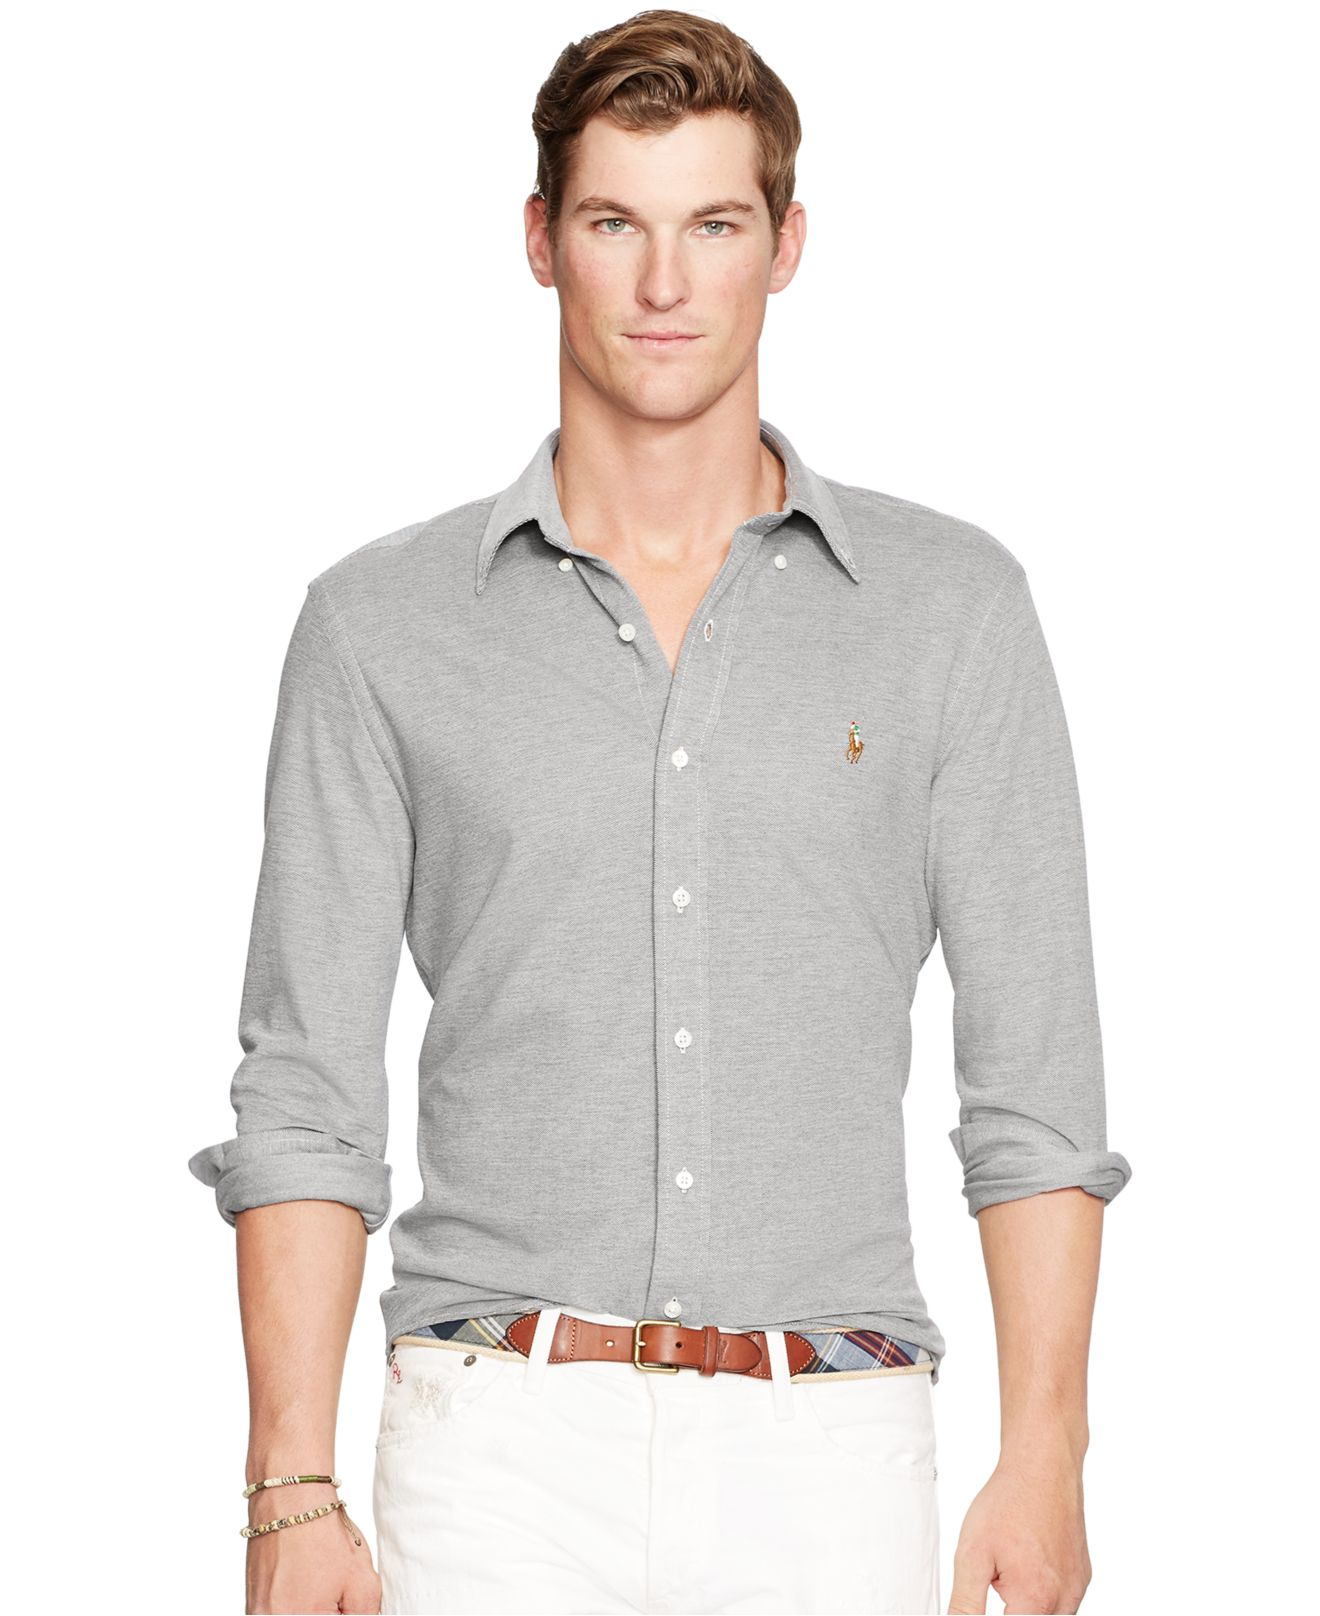 Polo Ralph Lauren Cotton Knit Oxford Shirt in Black for Men - Lyst